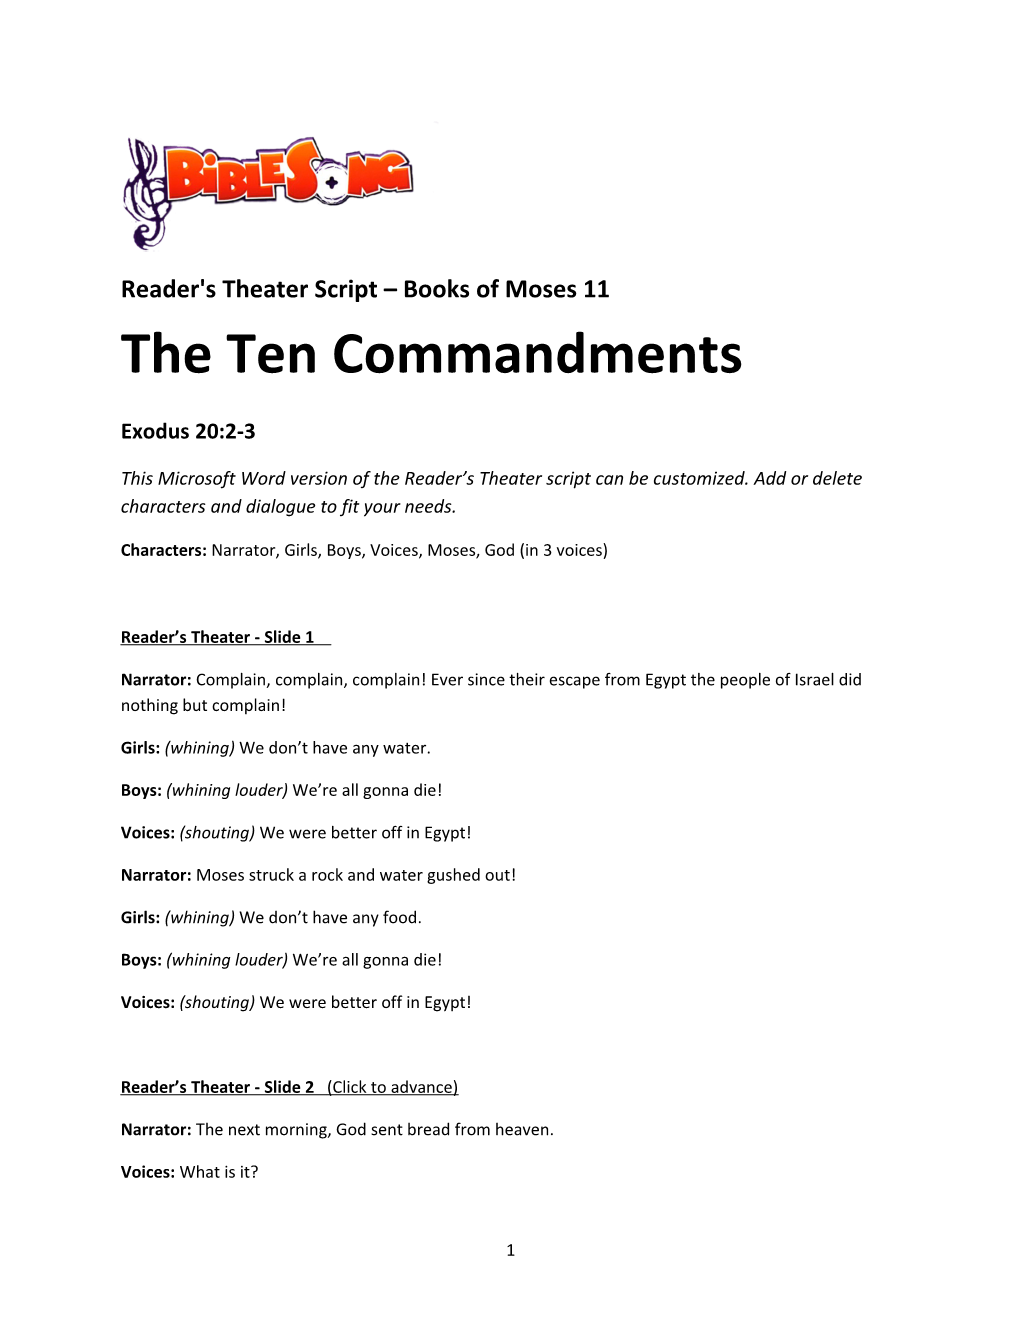 Reader's Theater Script Books of Moses 11 the Ten Commandments